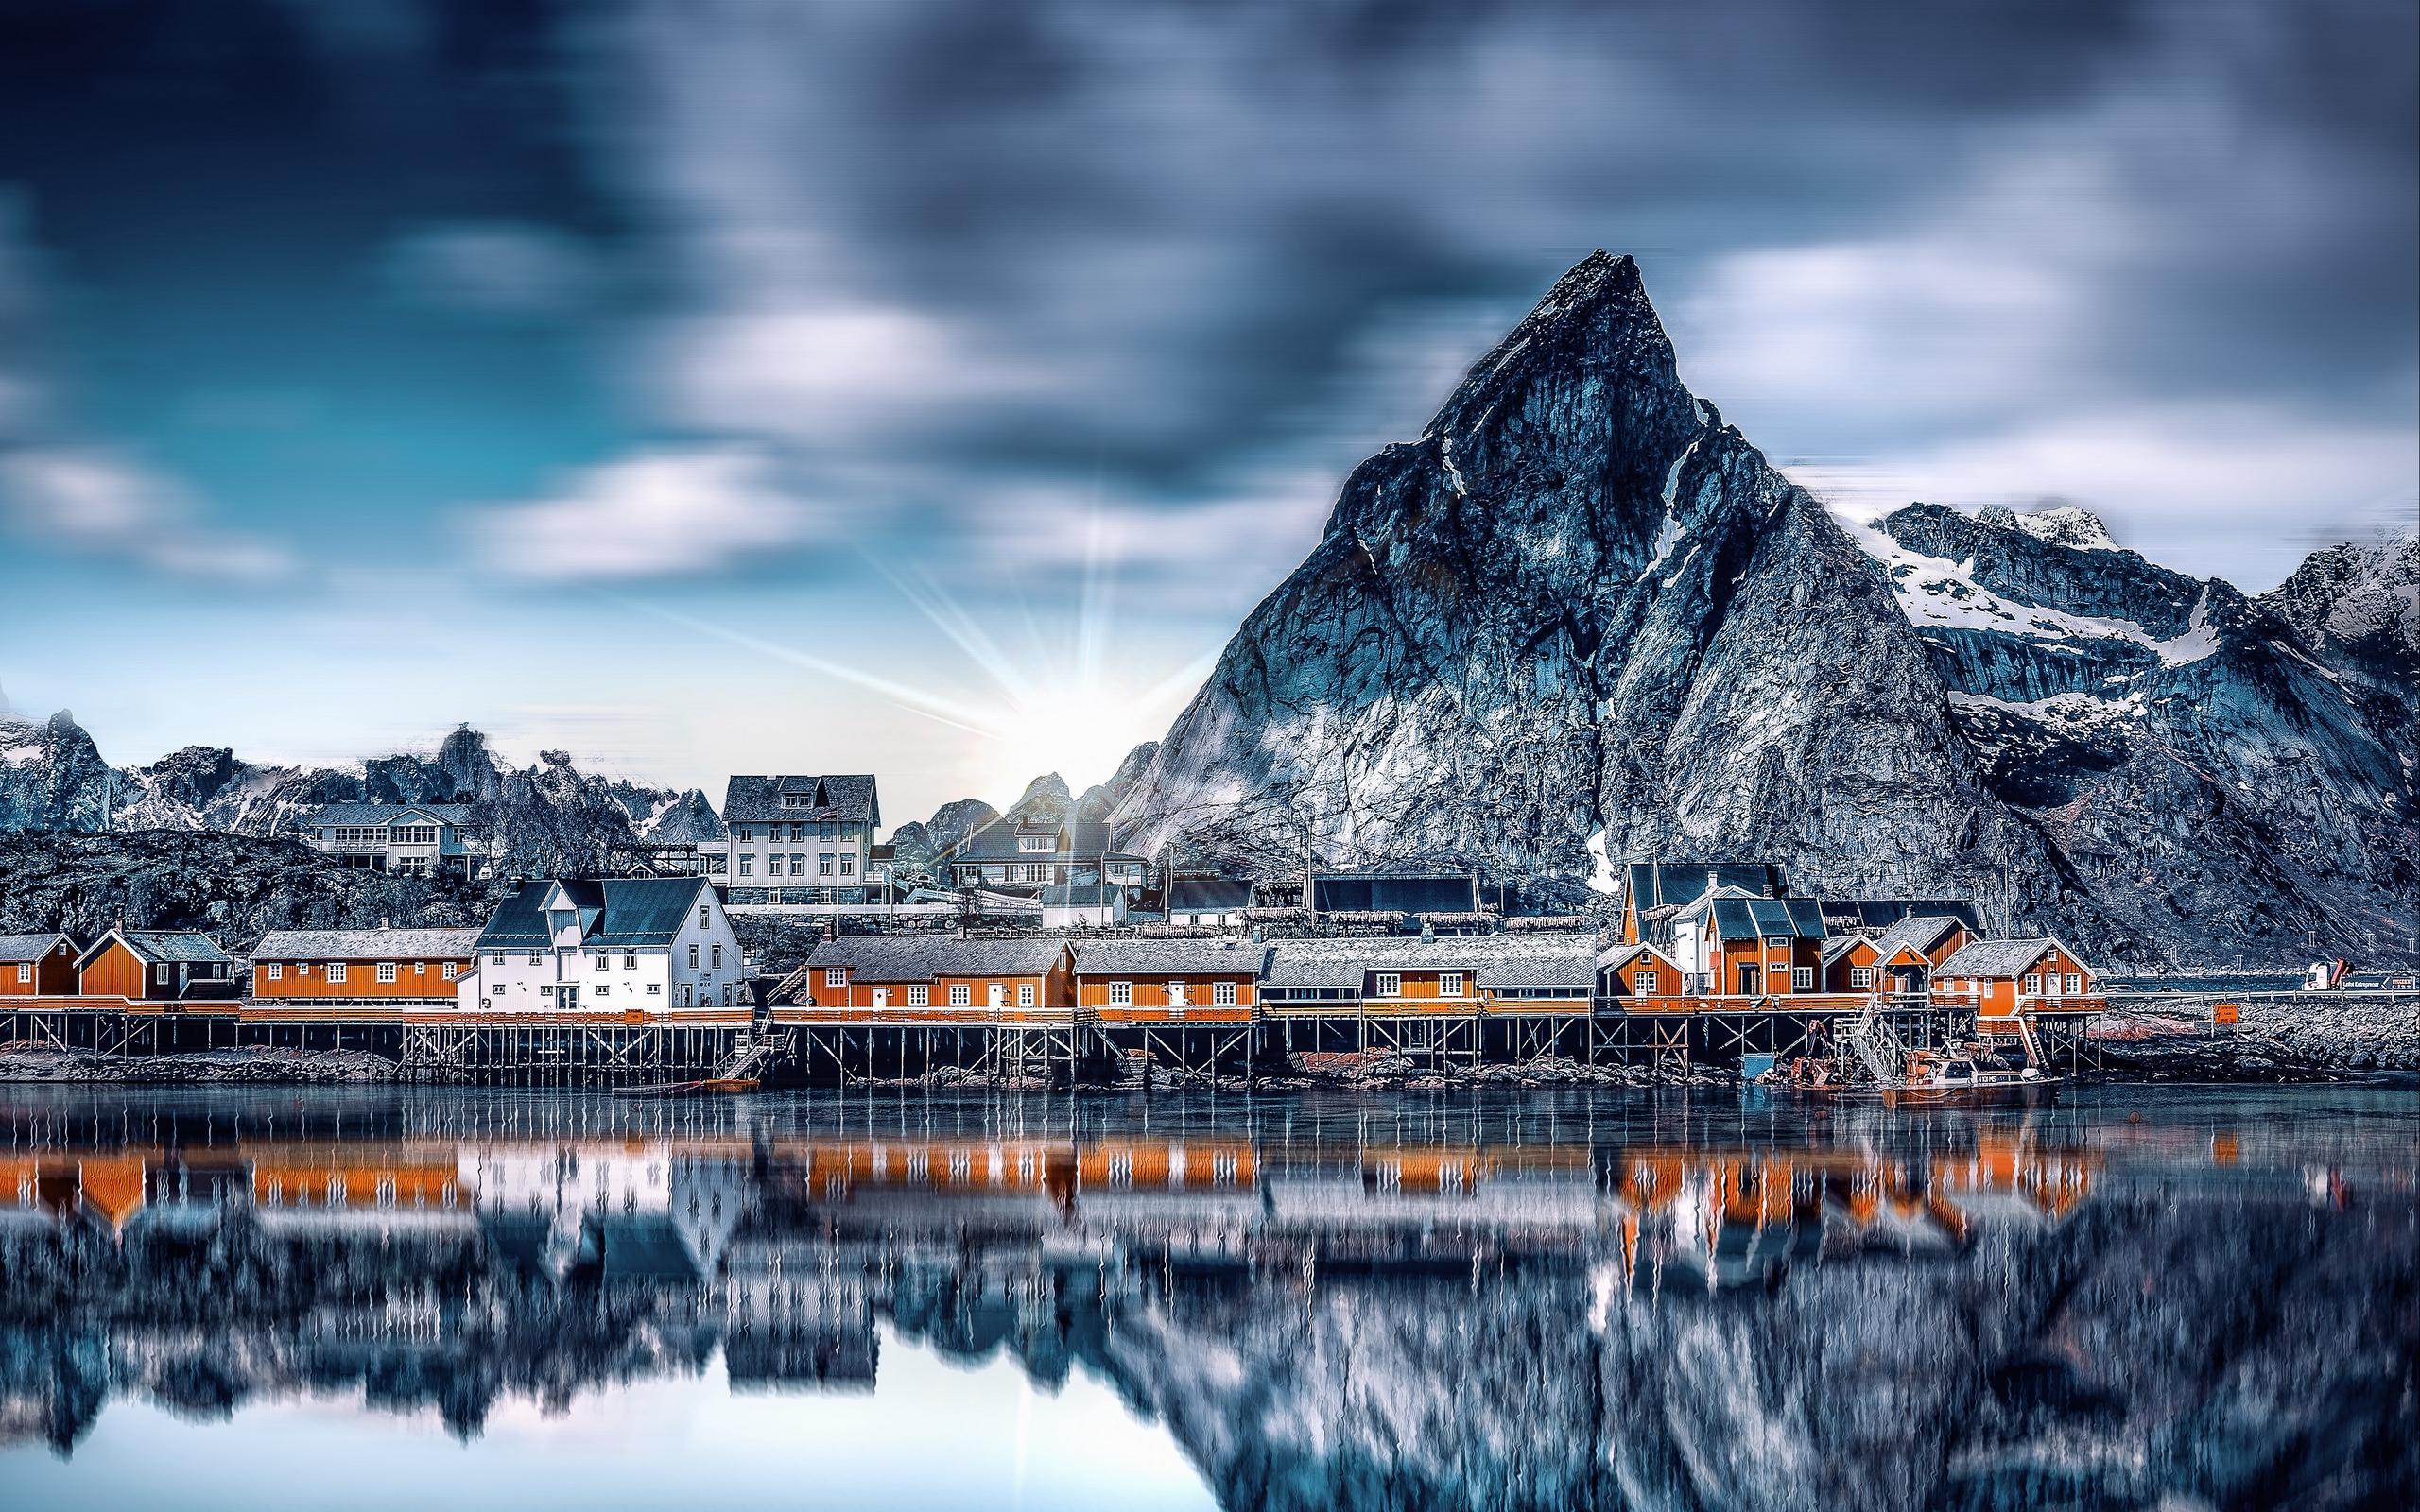 Download wallpaper 2560x1600 mountains, lake, buildings, reflection